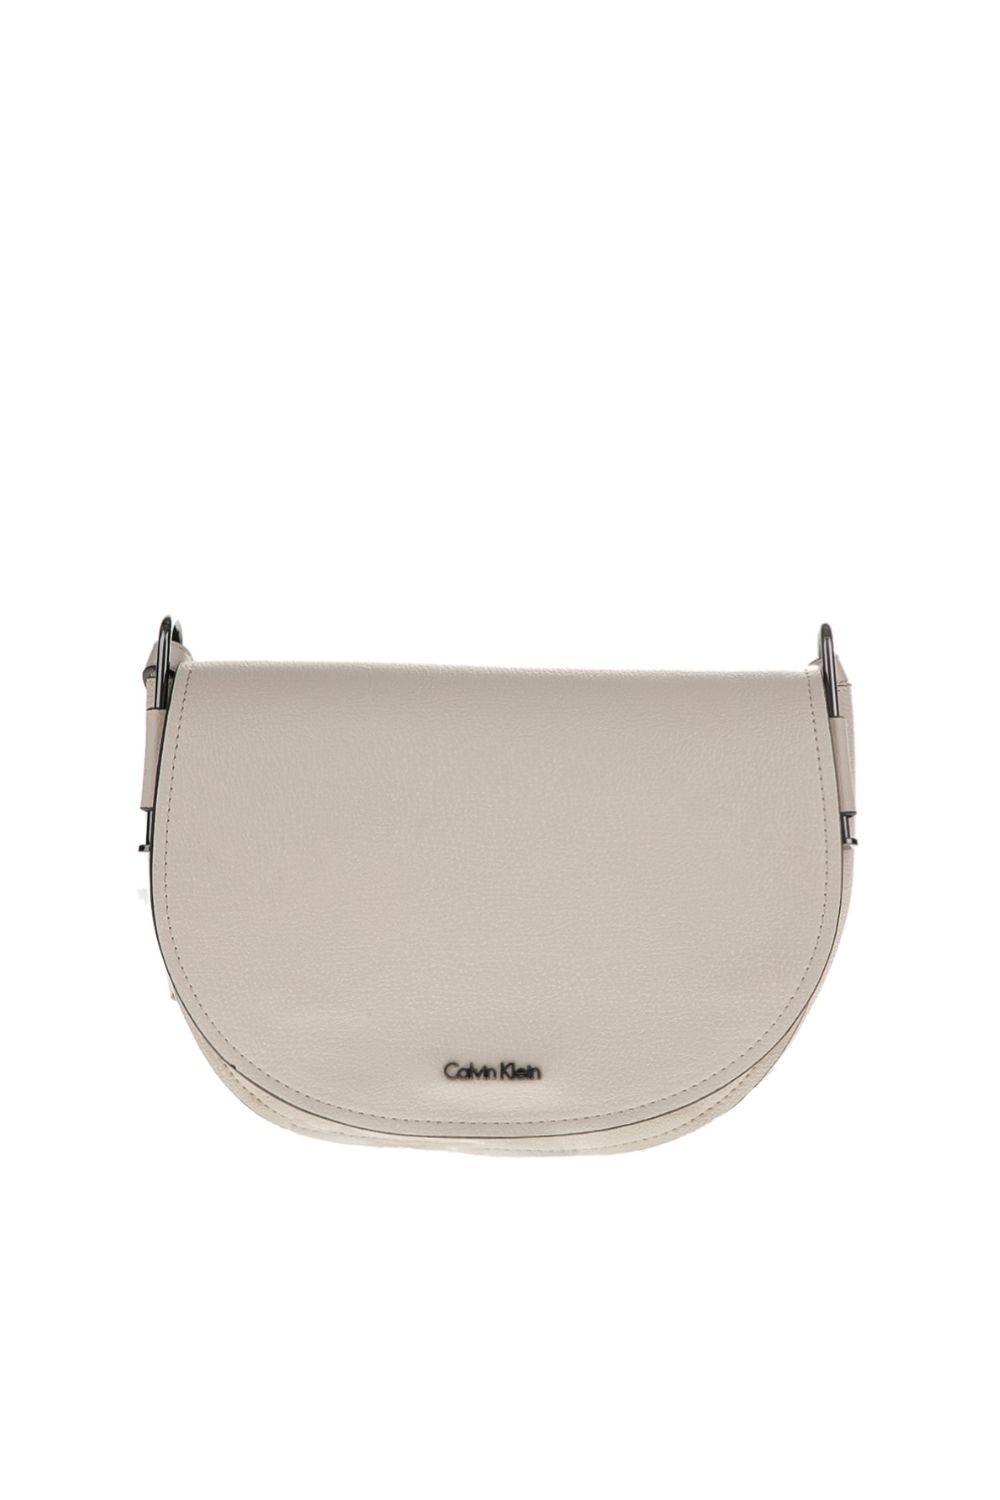 CALVIN KLEIN JEANS – Γυναικεία τσάντα χιαστί Calvin Klein Jeans ARCH LARGE μπεζ 1611299.0-0084